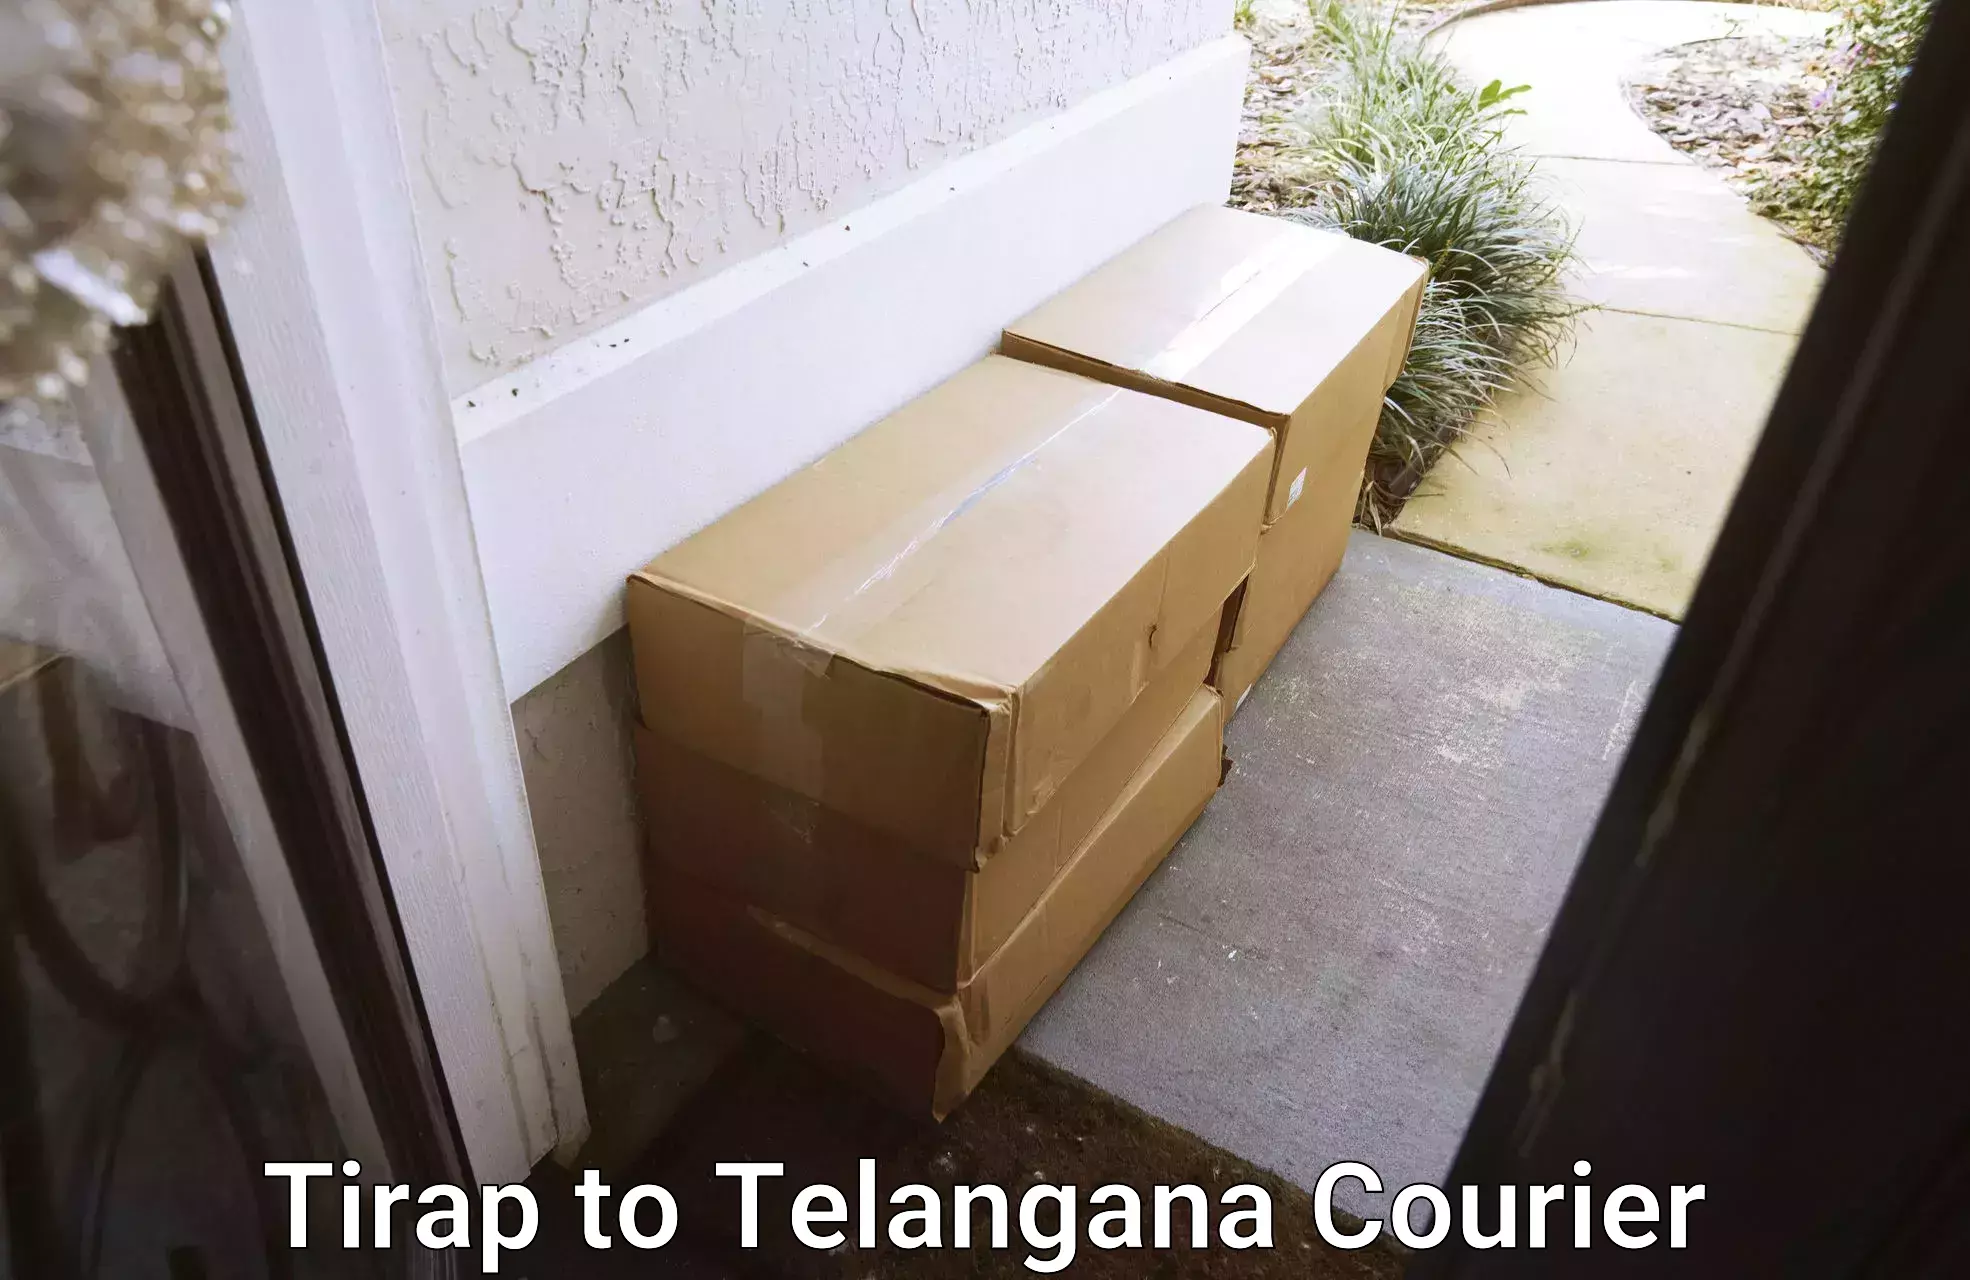 Supply chain efficiency Tirap to Vikarabad